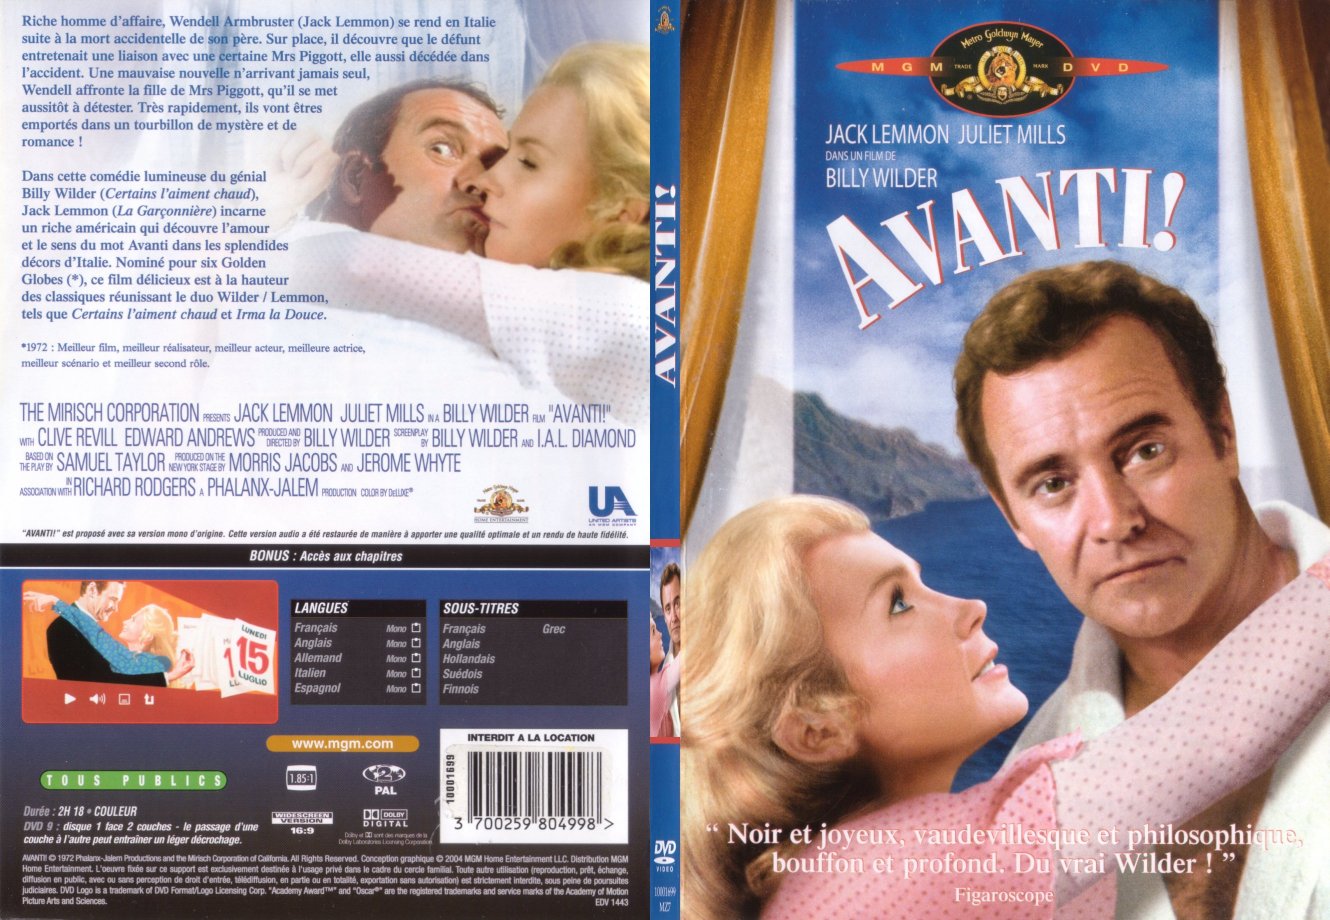 Jaquette DVD Avanti - SLIM